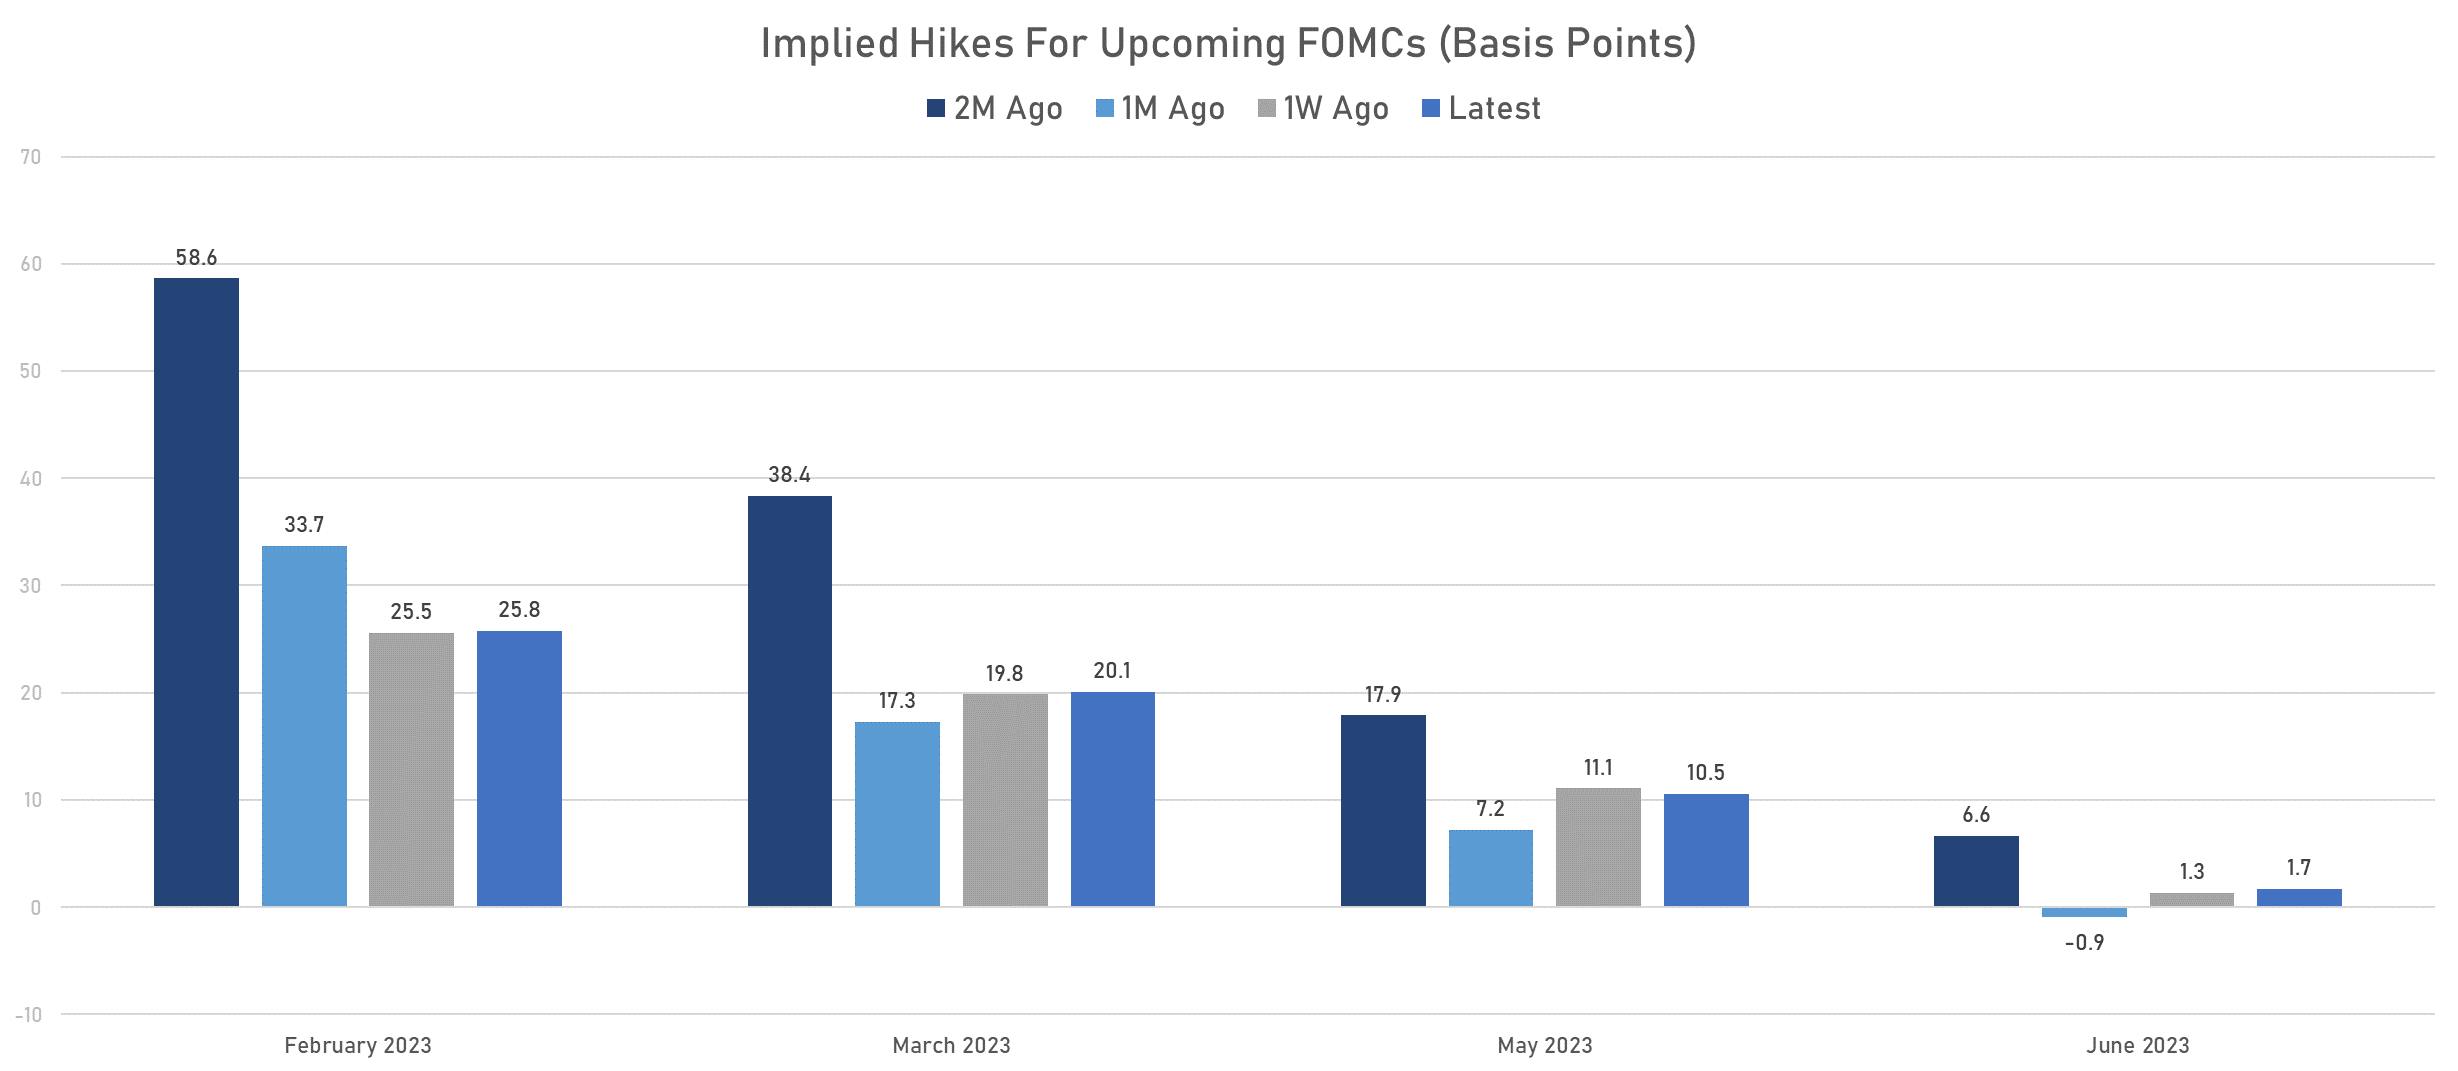 Hikes Priced Into Next FOMC Meetings | Sources: phipost.com, Refinitiv data